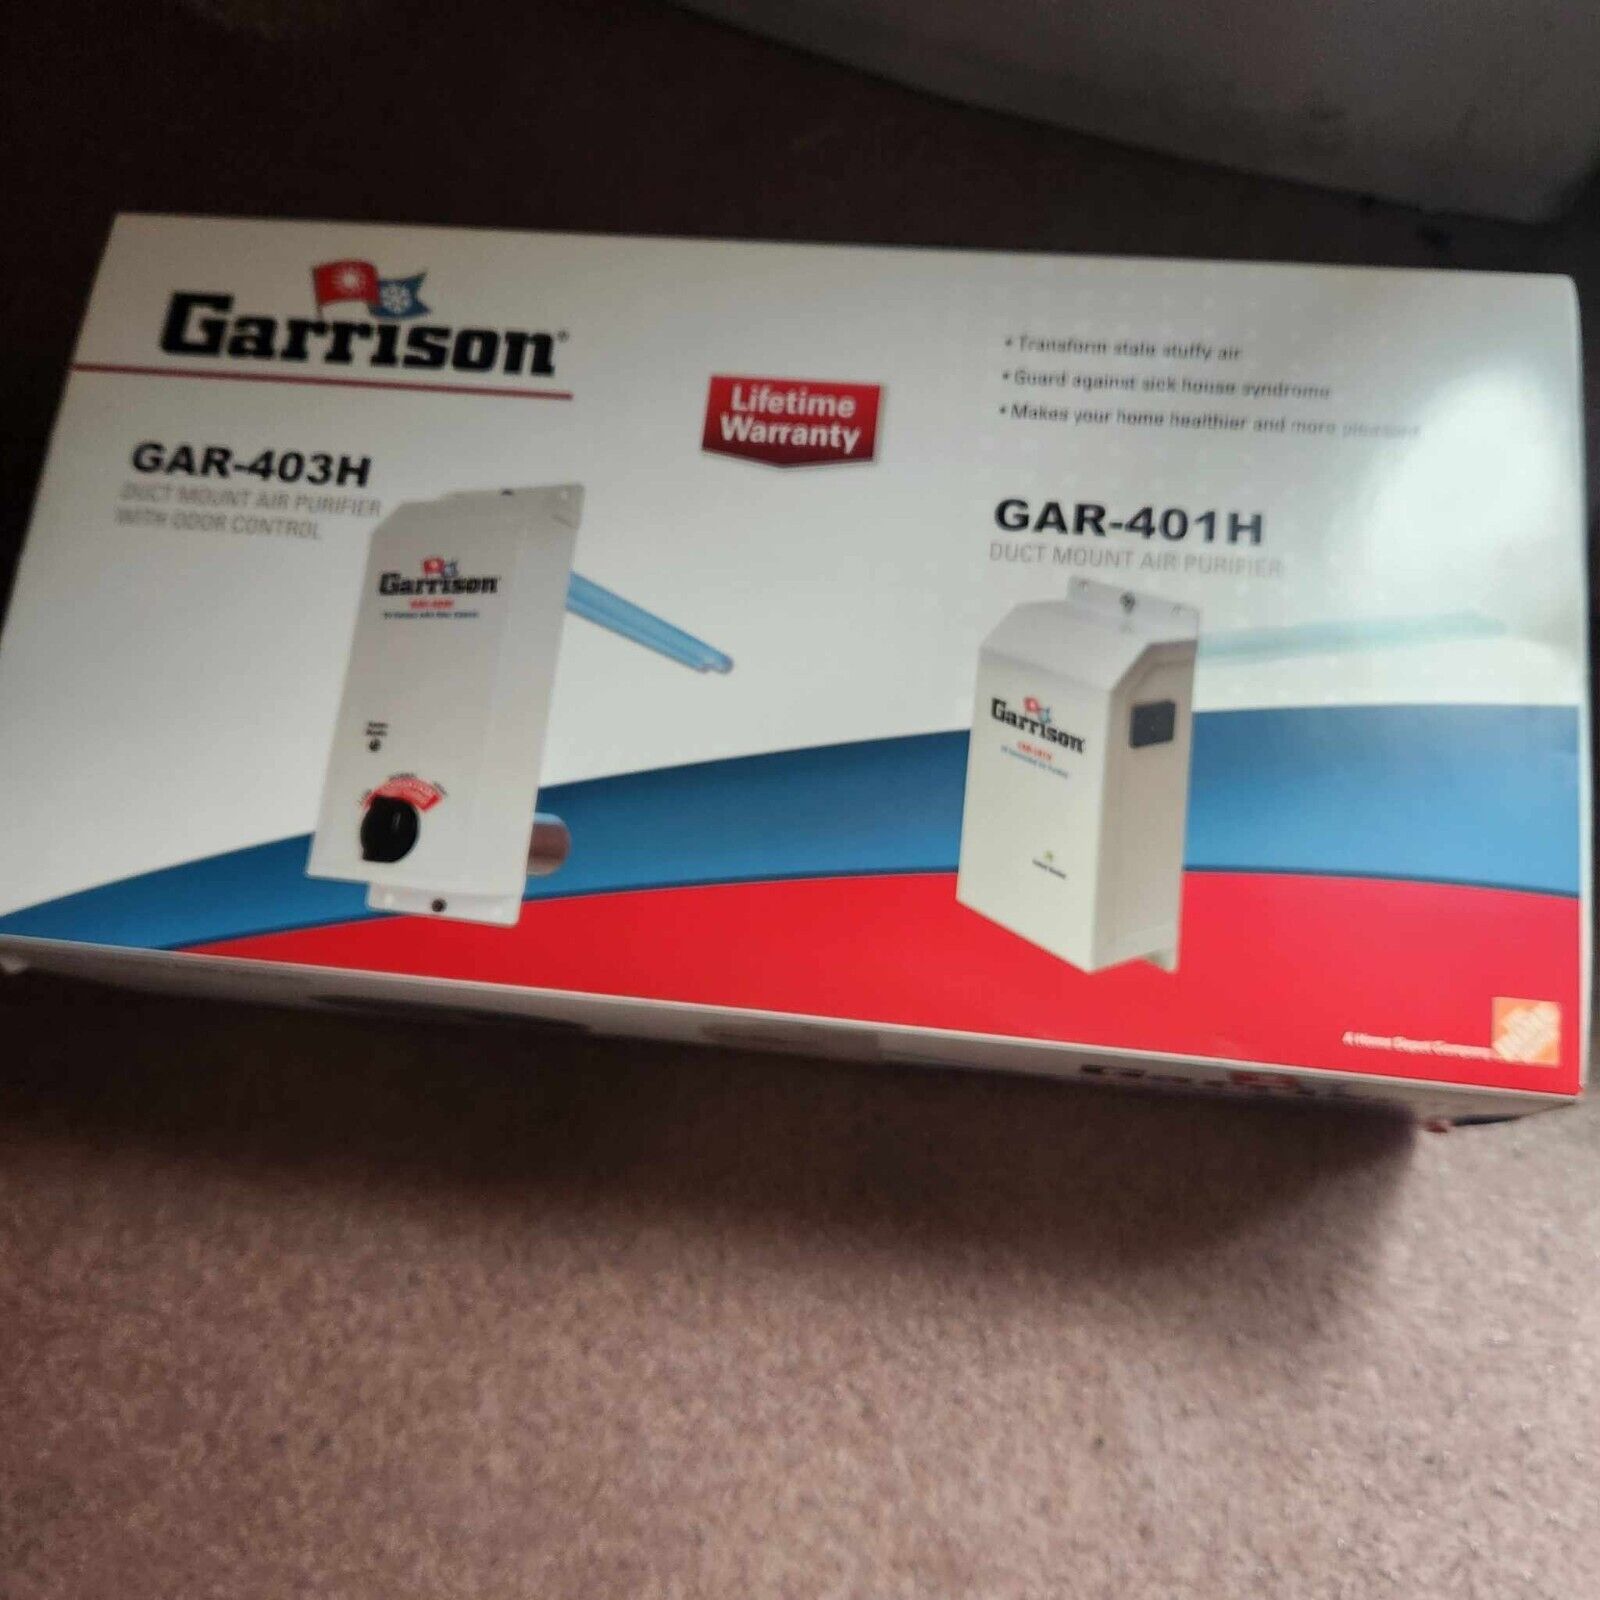 QTY / 2 Garrison GAR-401H Multivoltage UV Air Purifier NEW IN BOX (2)